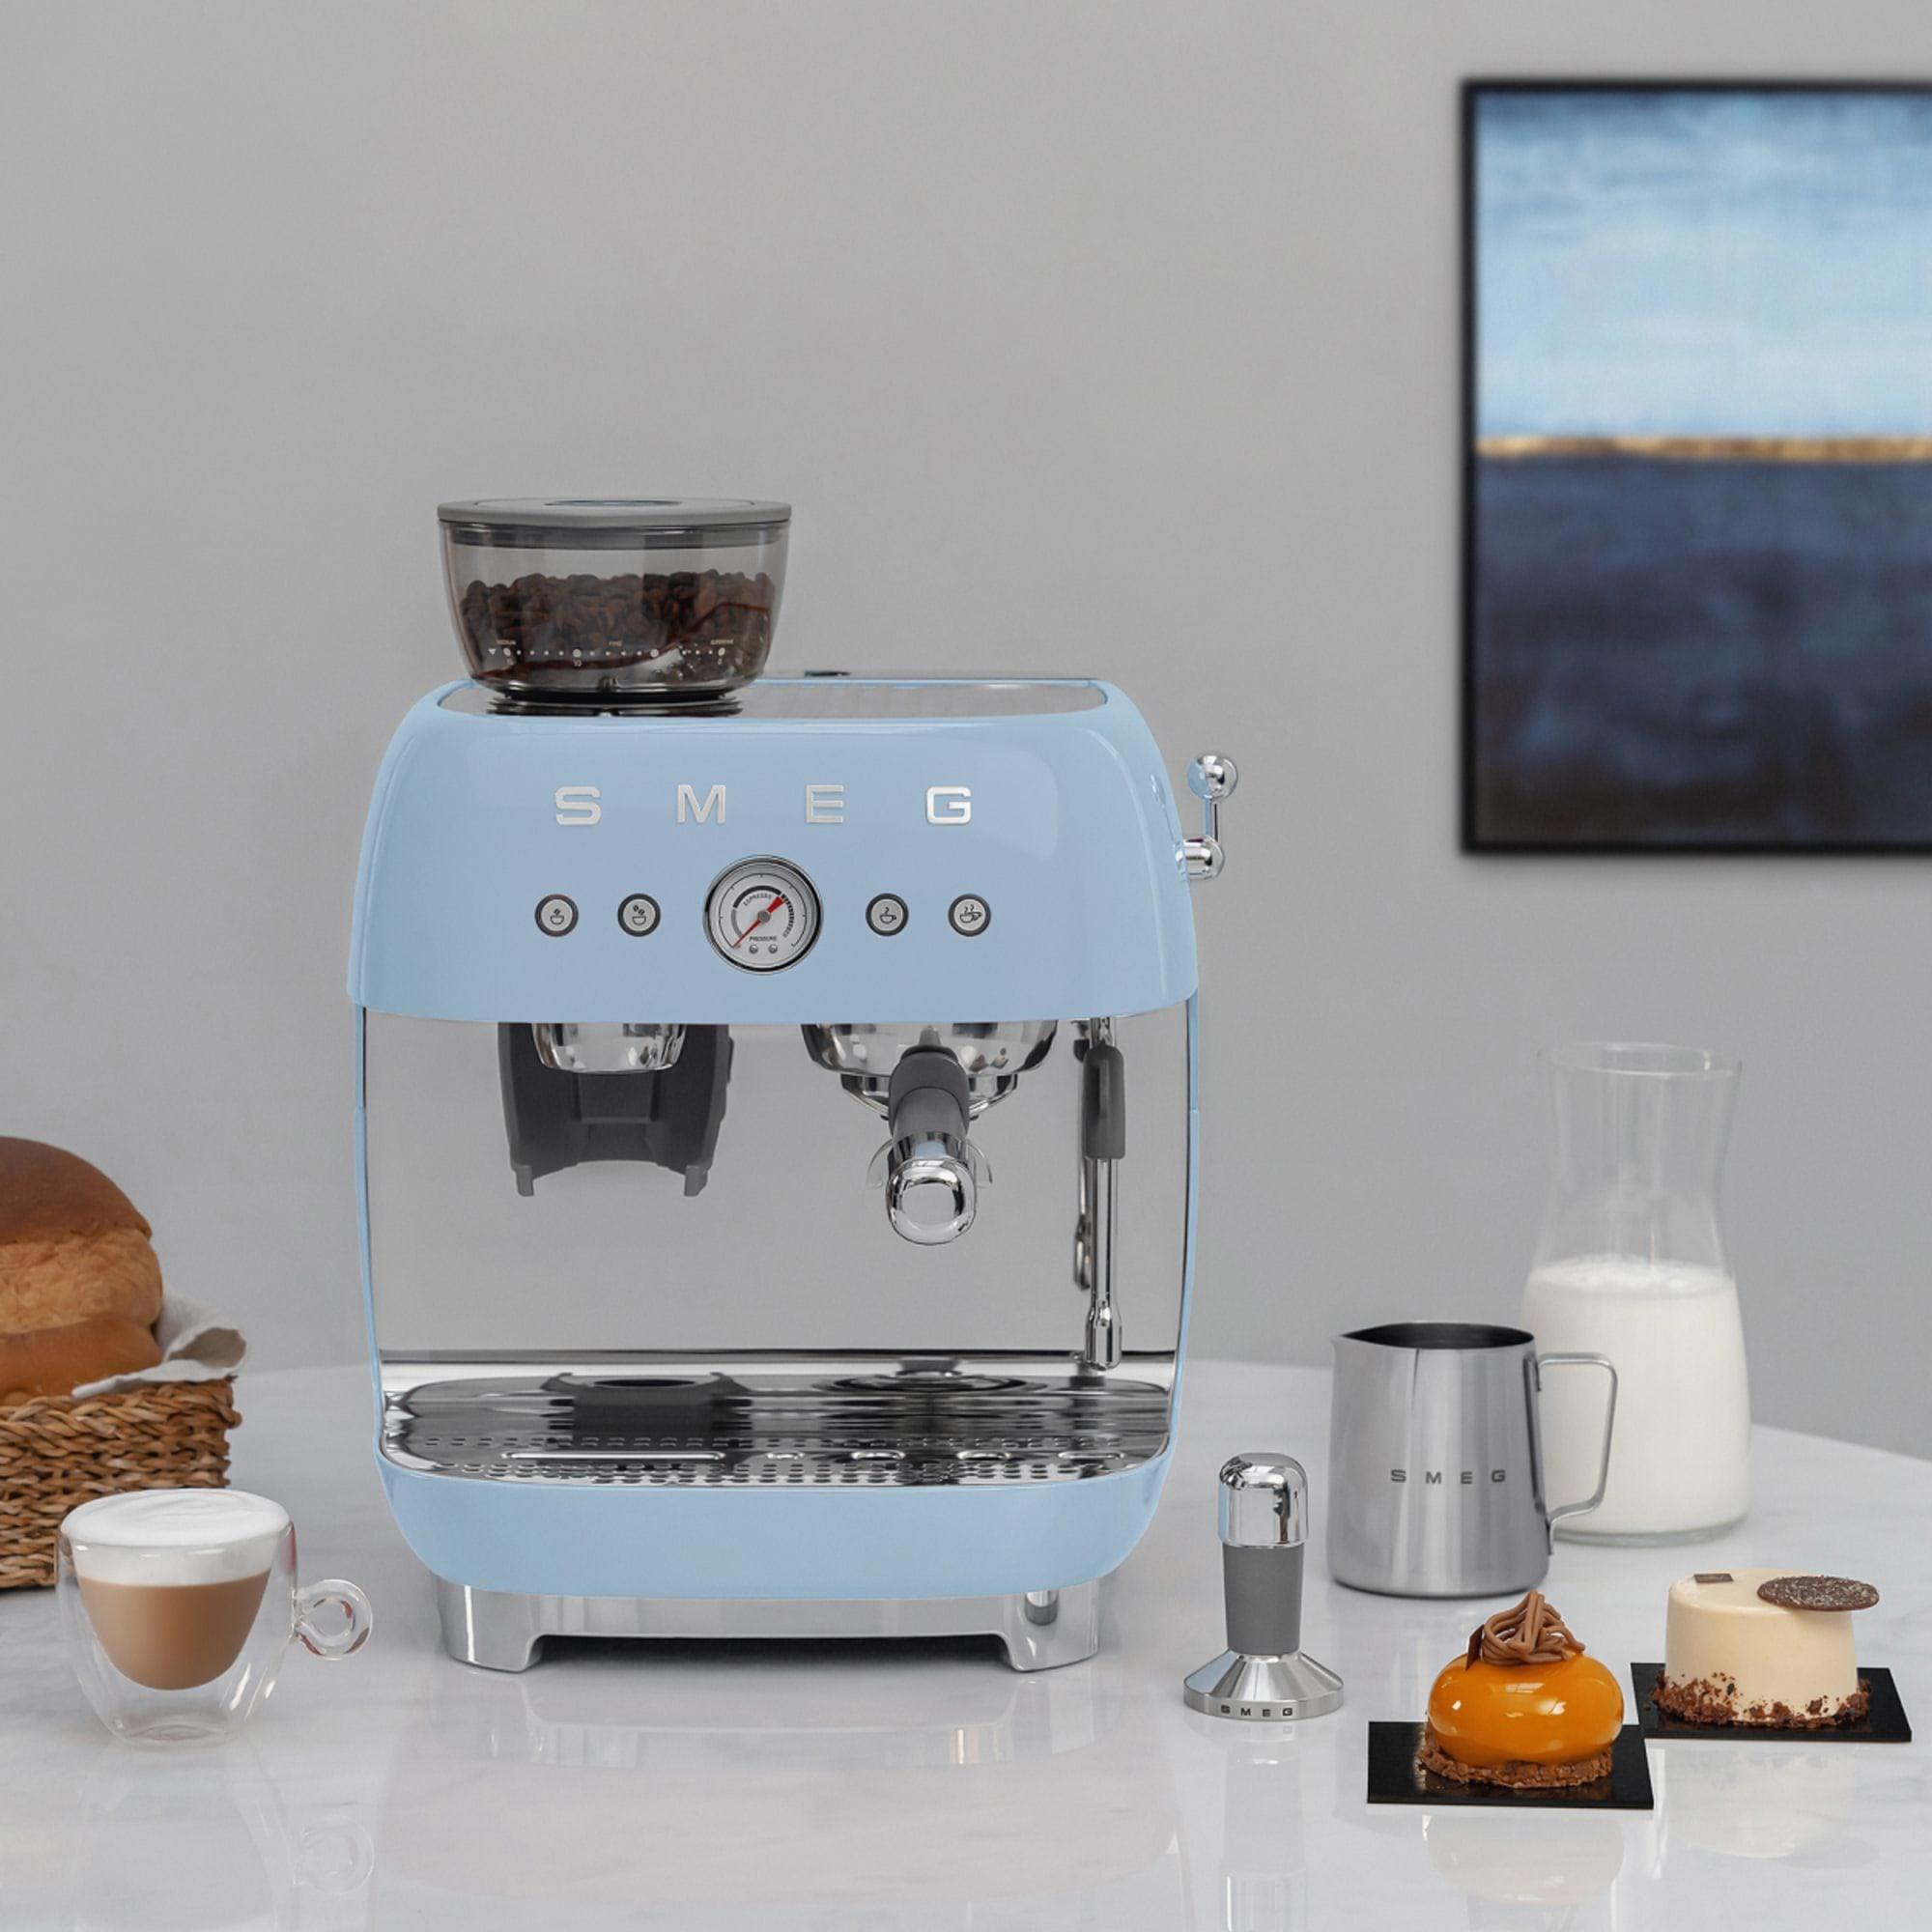 Smeg 50's Retro Style Espresso Machine with Built In Grinder Pastel Blue Image 3